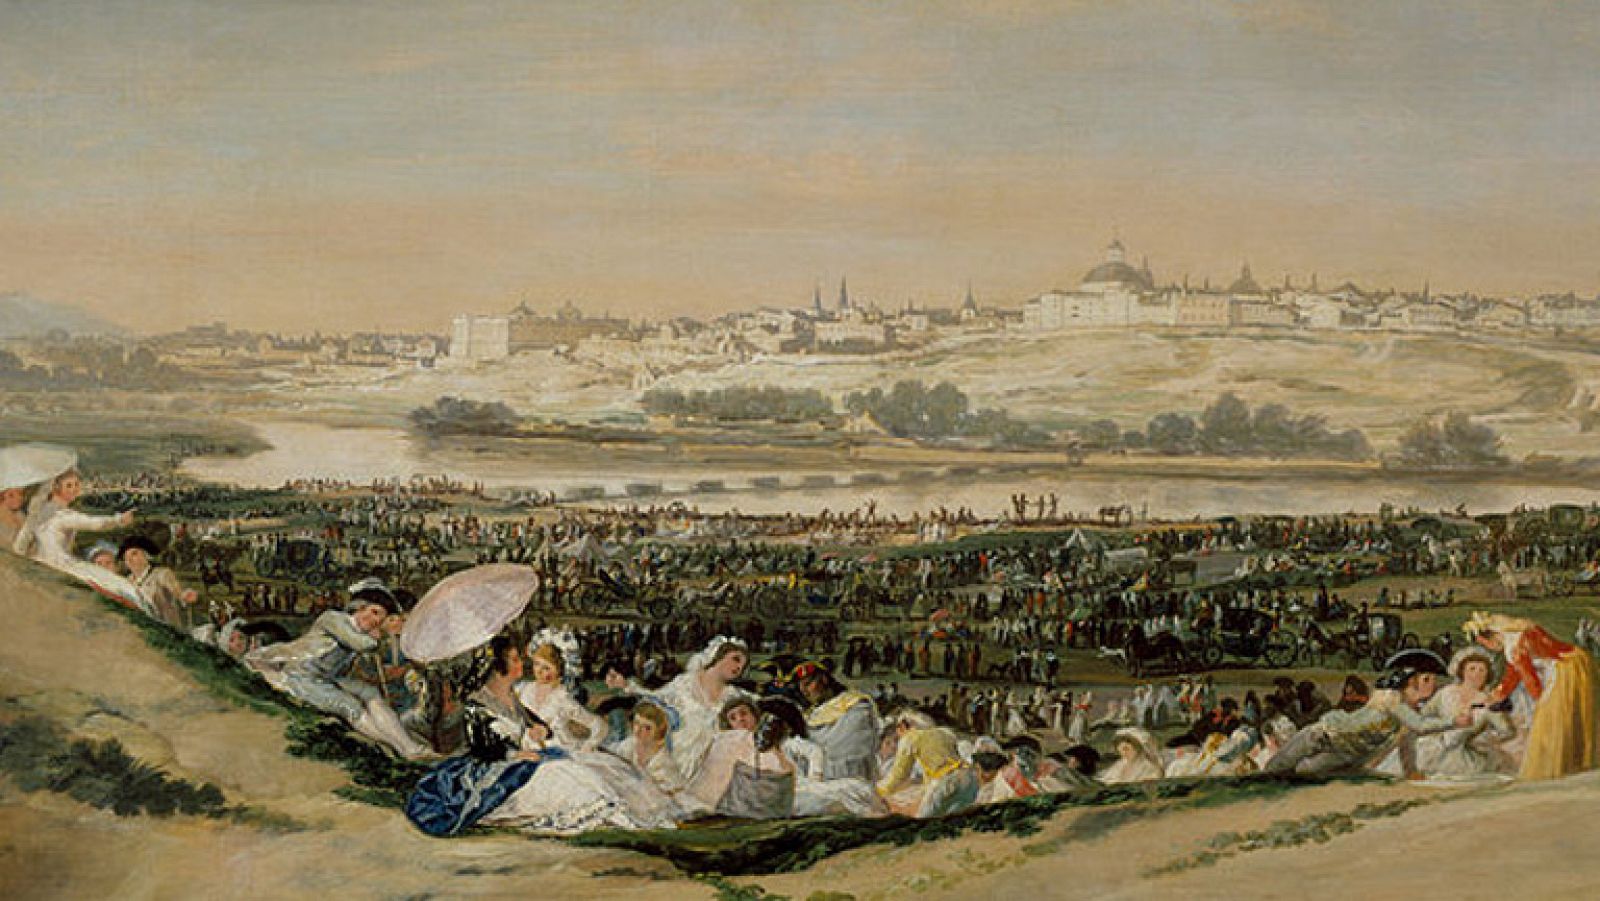 Mirar un cuadro - La pradera de San Isidro (Goya)